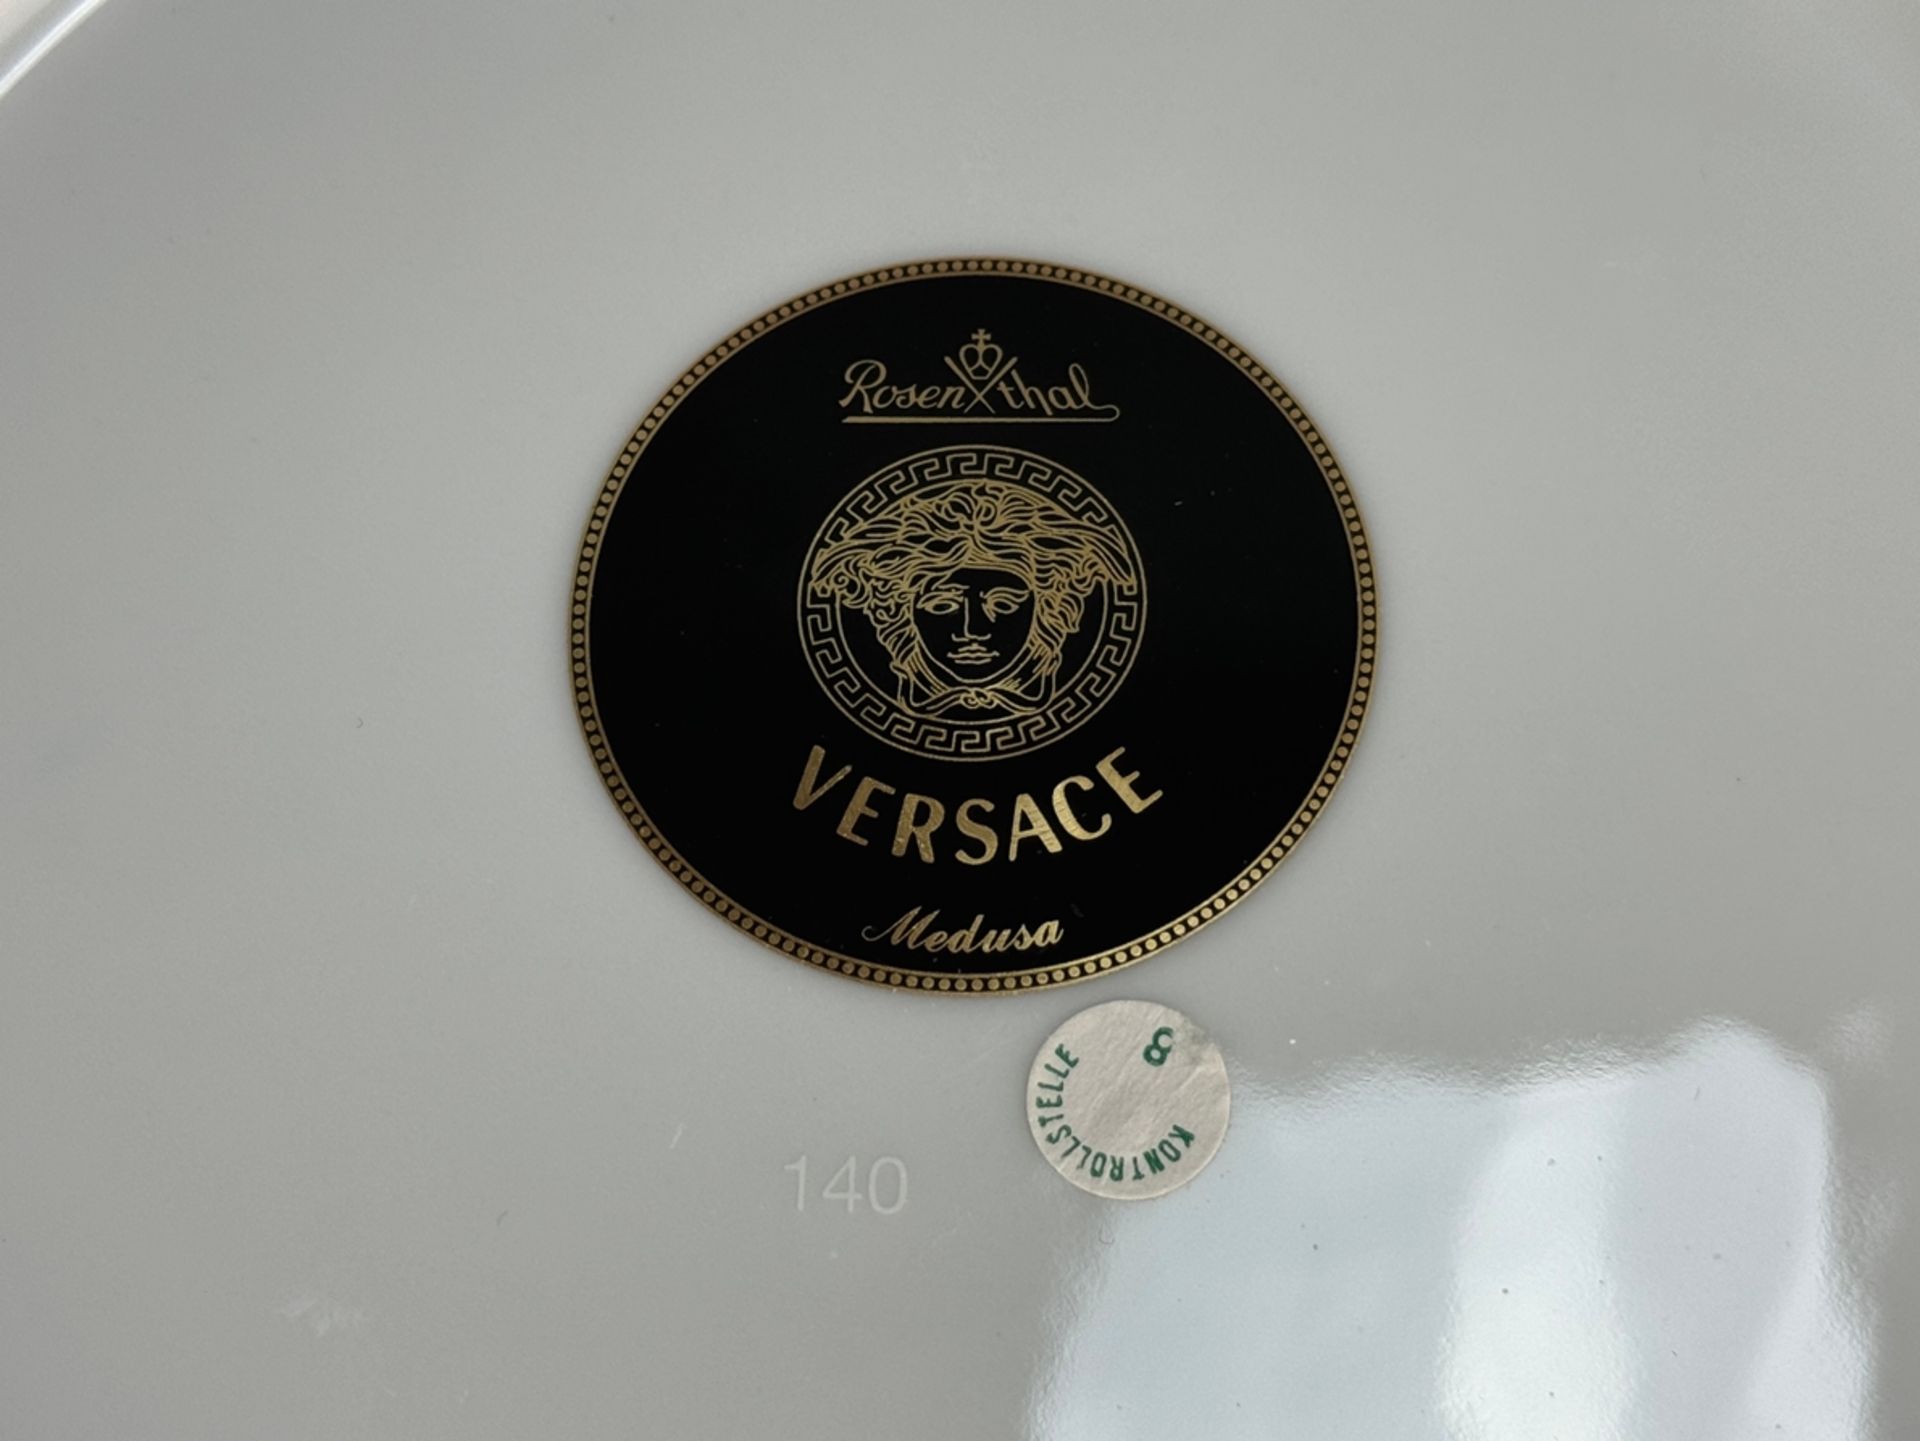 Six dinner plates, Rosenthal, Versace design, Medusa decor, black/gold base mark, border with baroq - Image 2 of 2